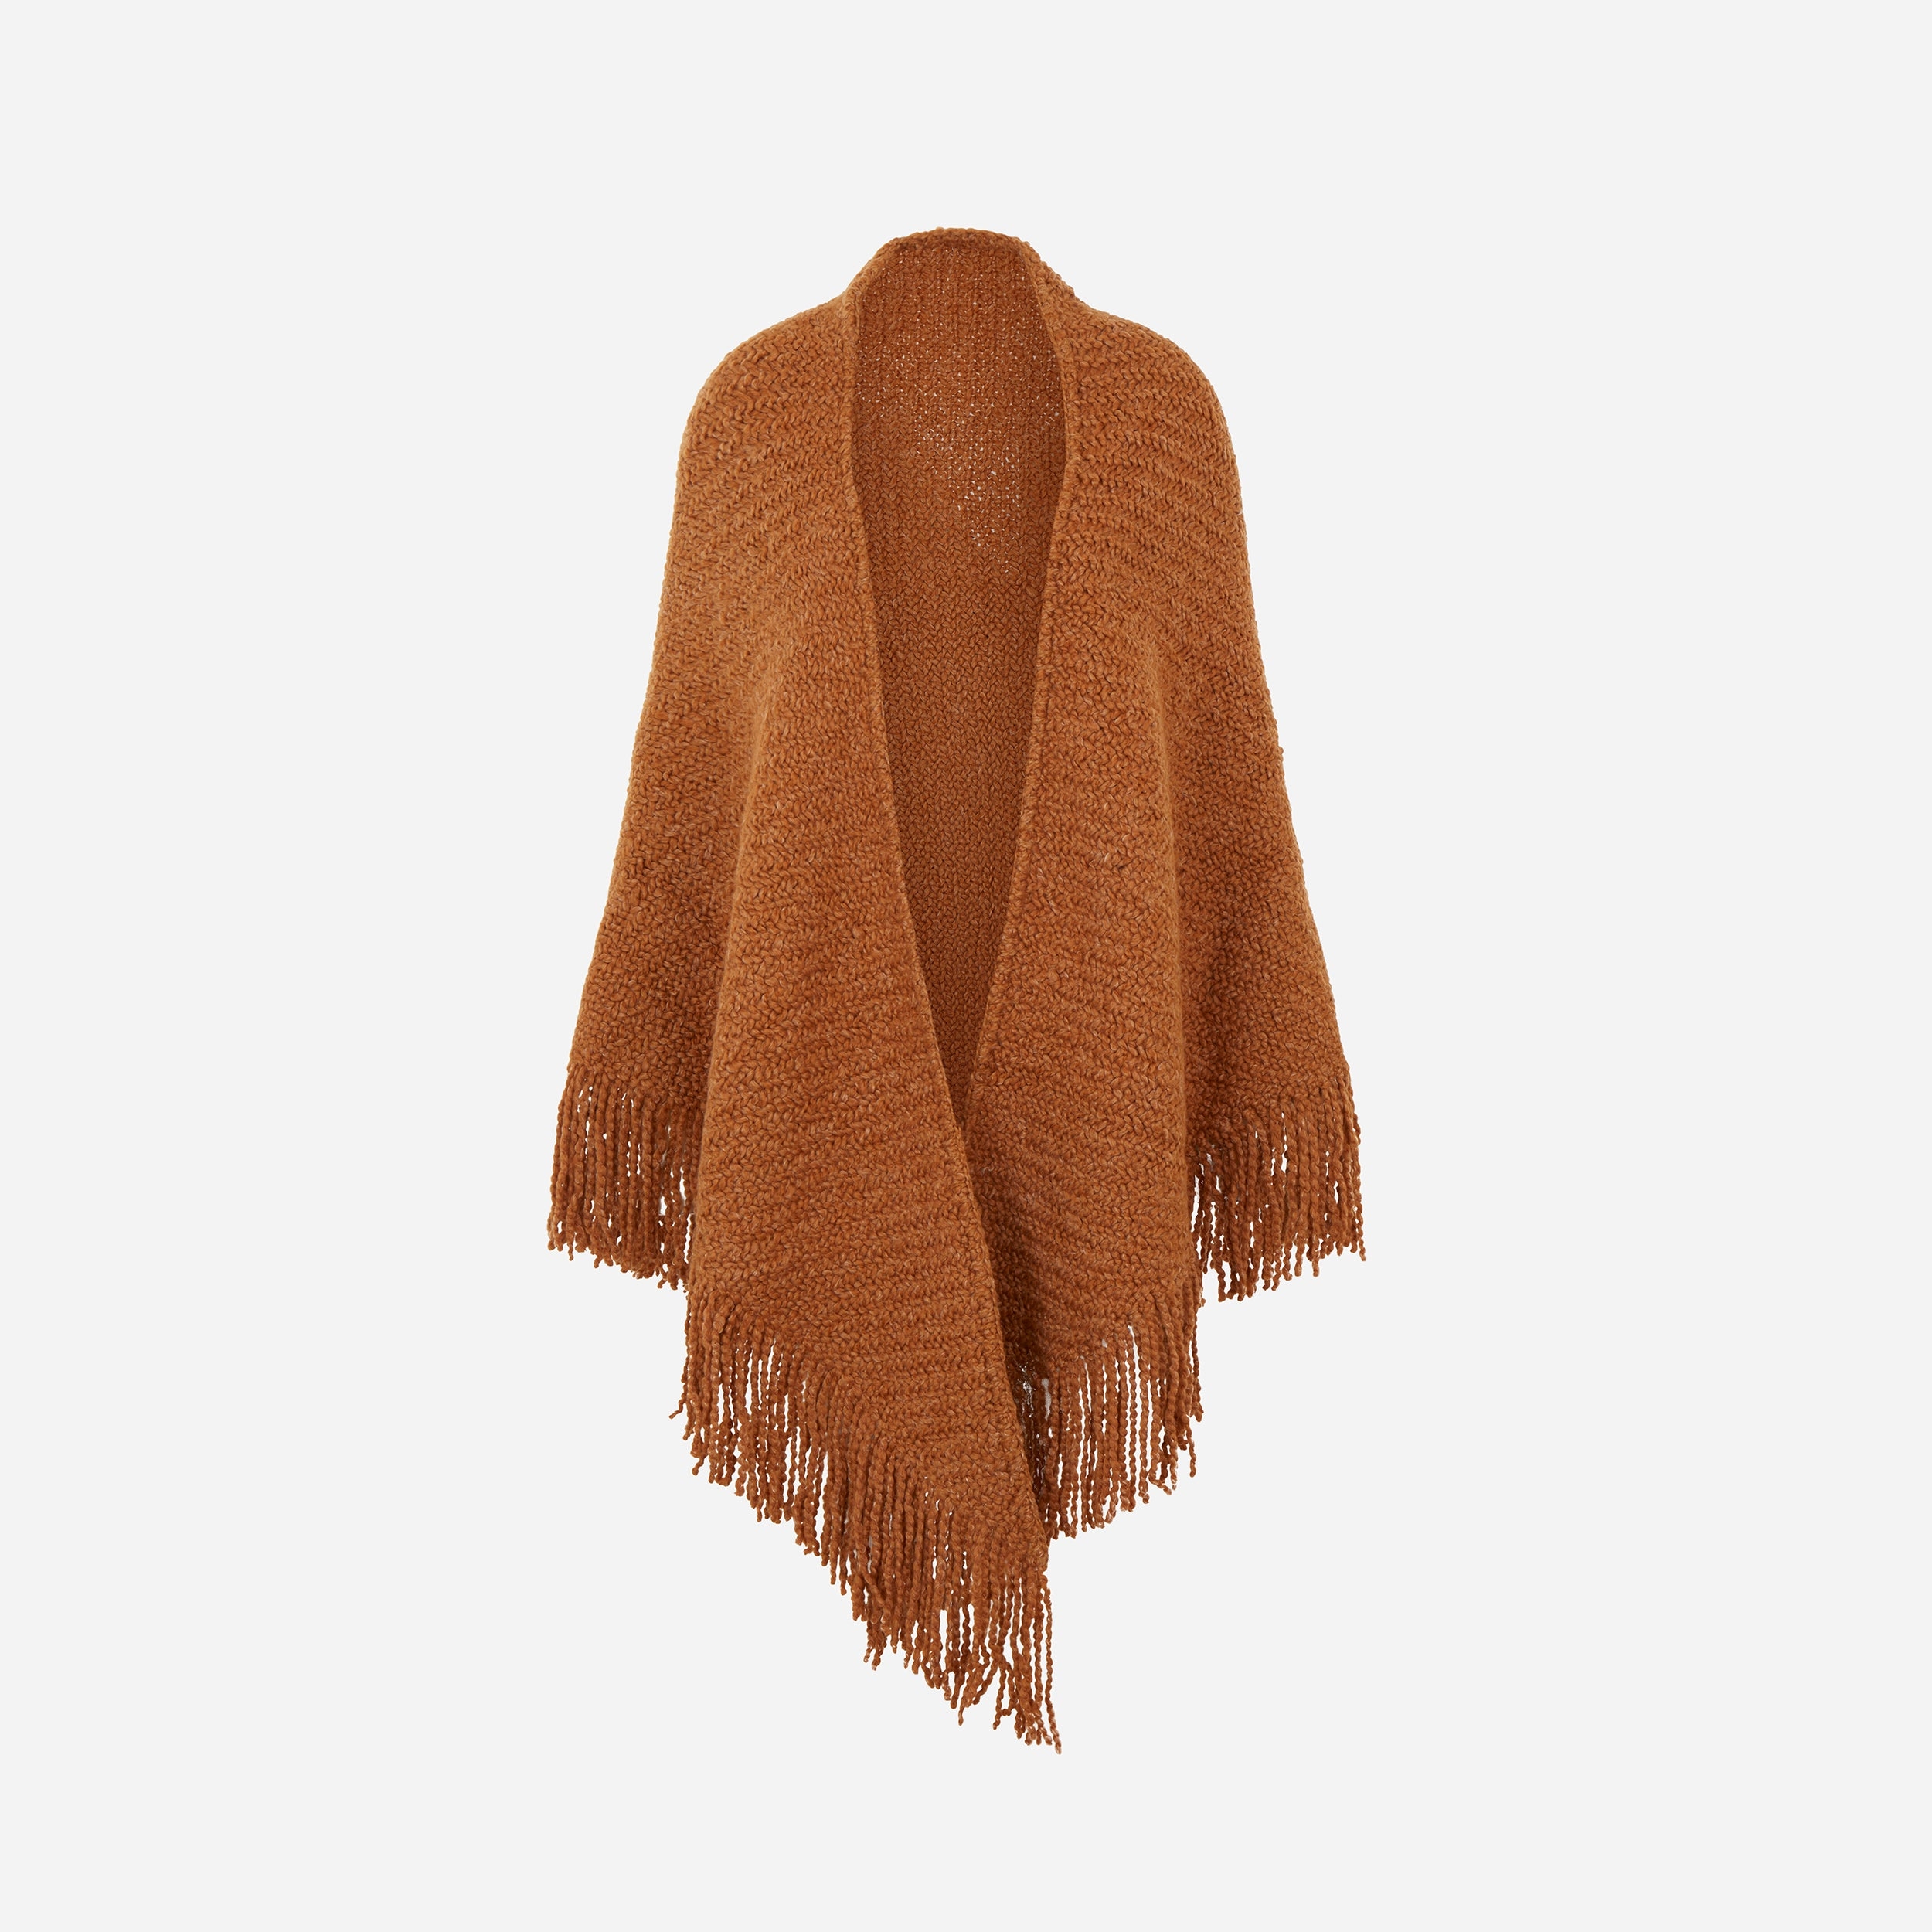 Aessai Knitwear Shawl in Camel – merino wool blend – Luxury Marino Wool – Fairtrade & Sustainable – Aessai